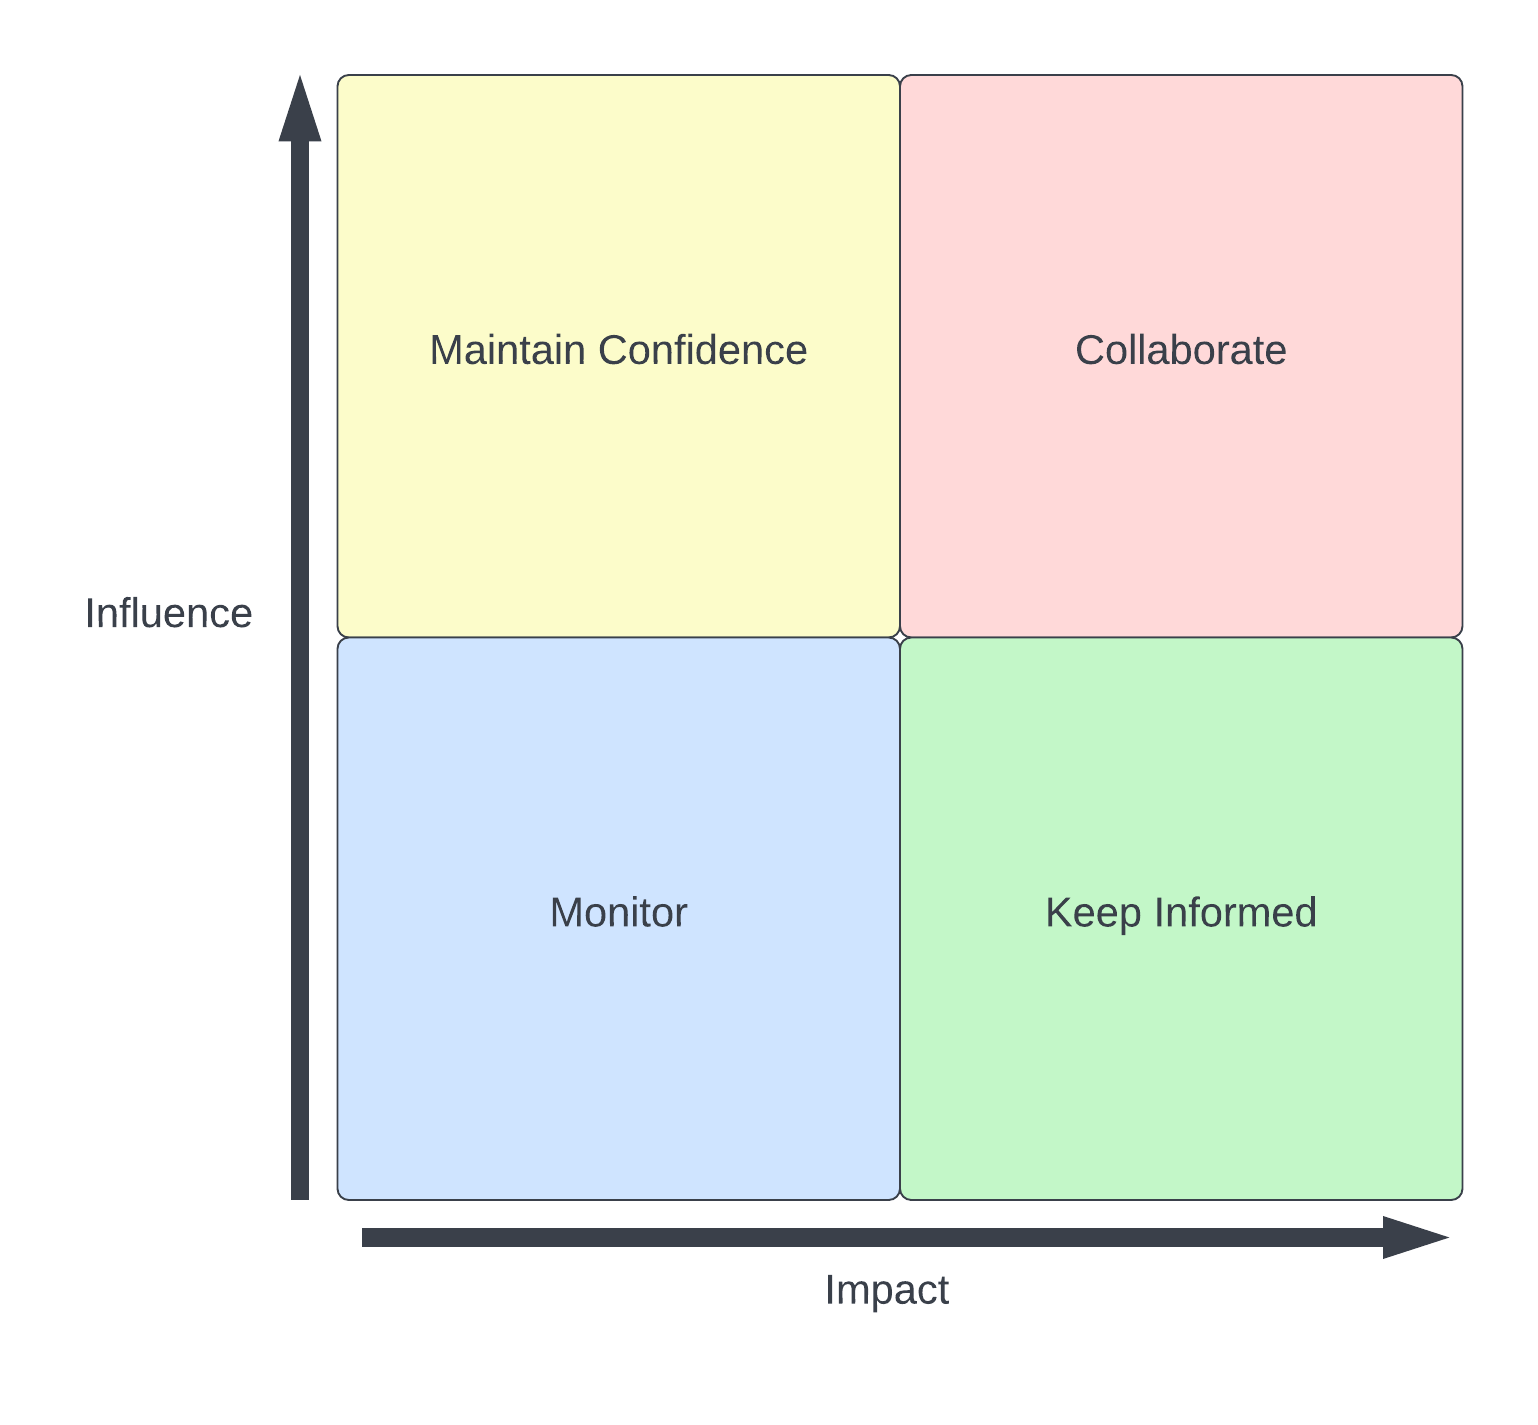 A classic stakeholder matrix